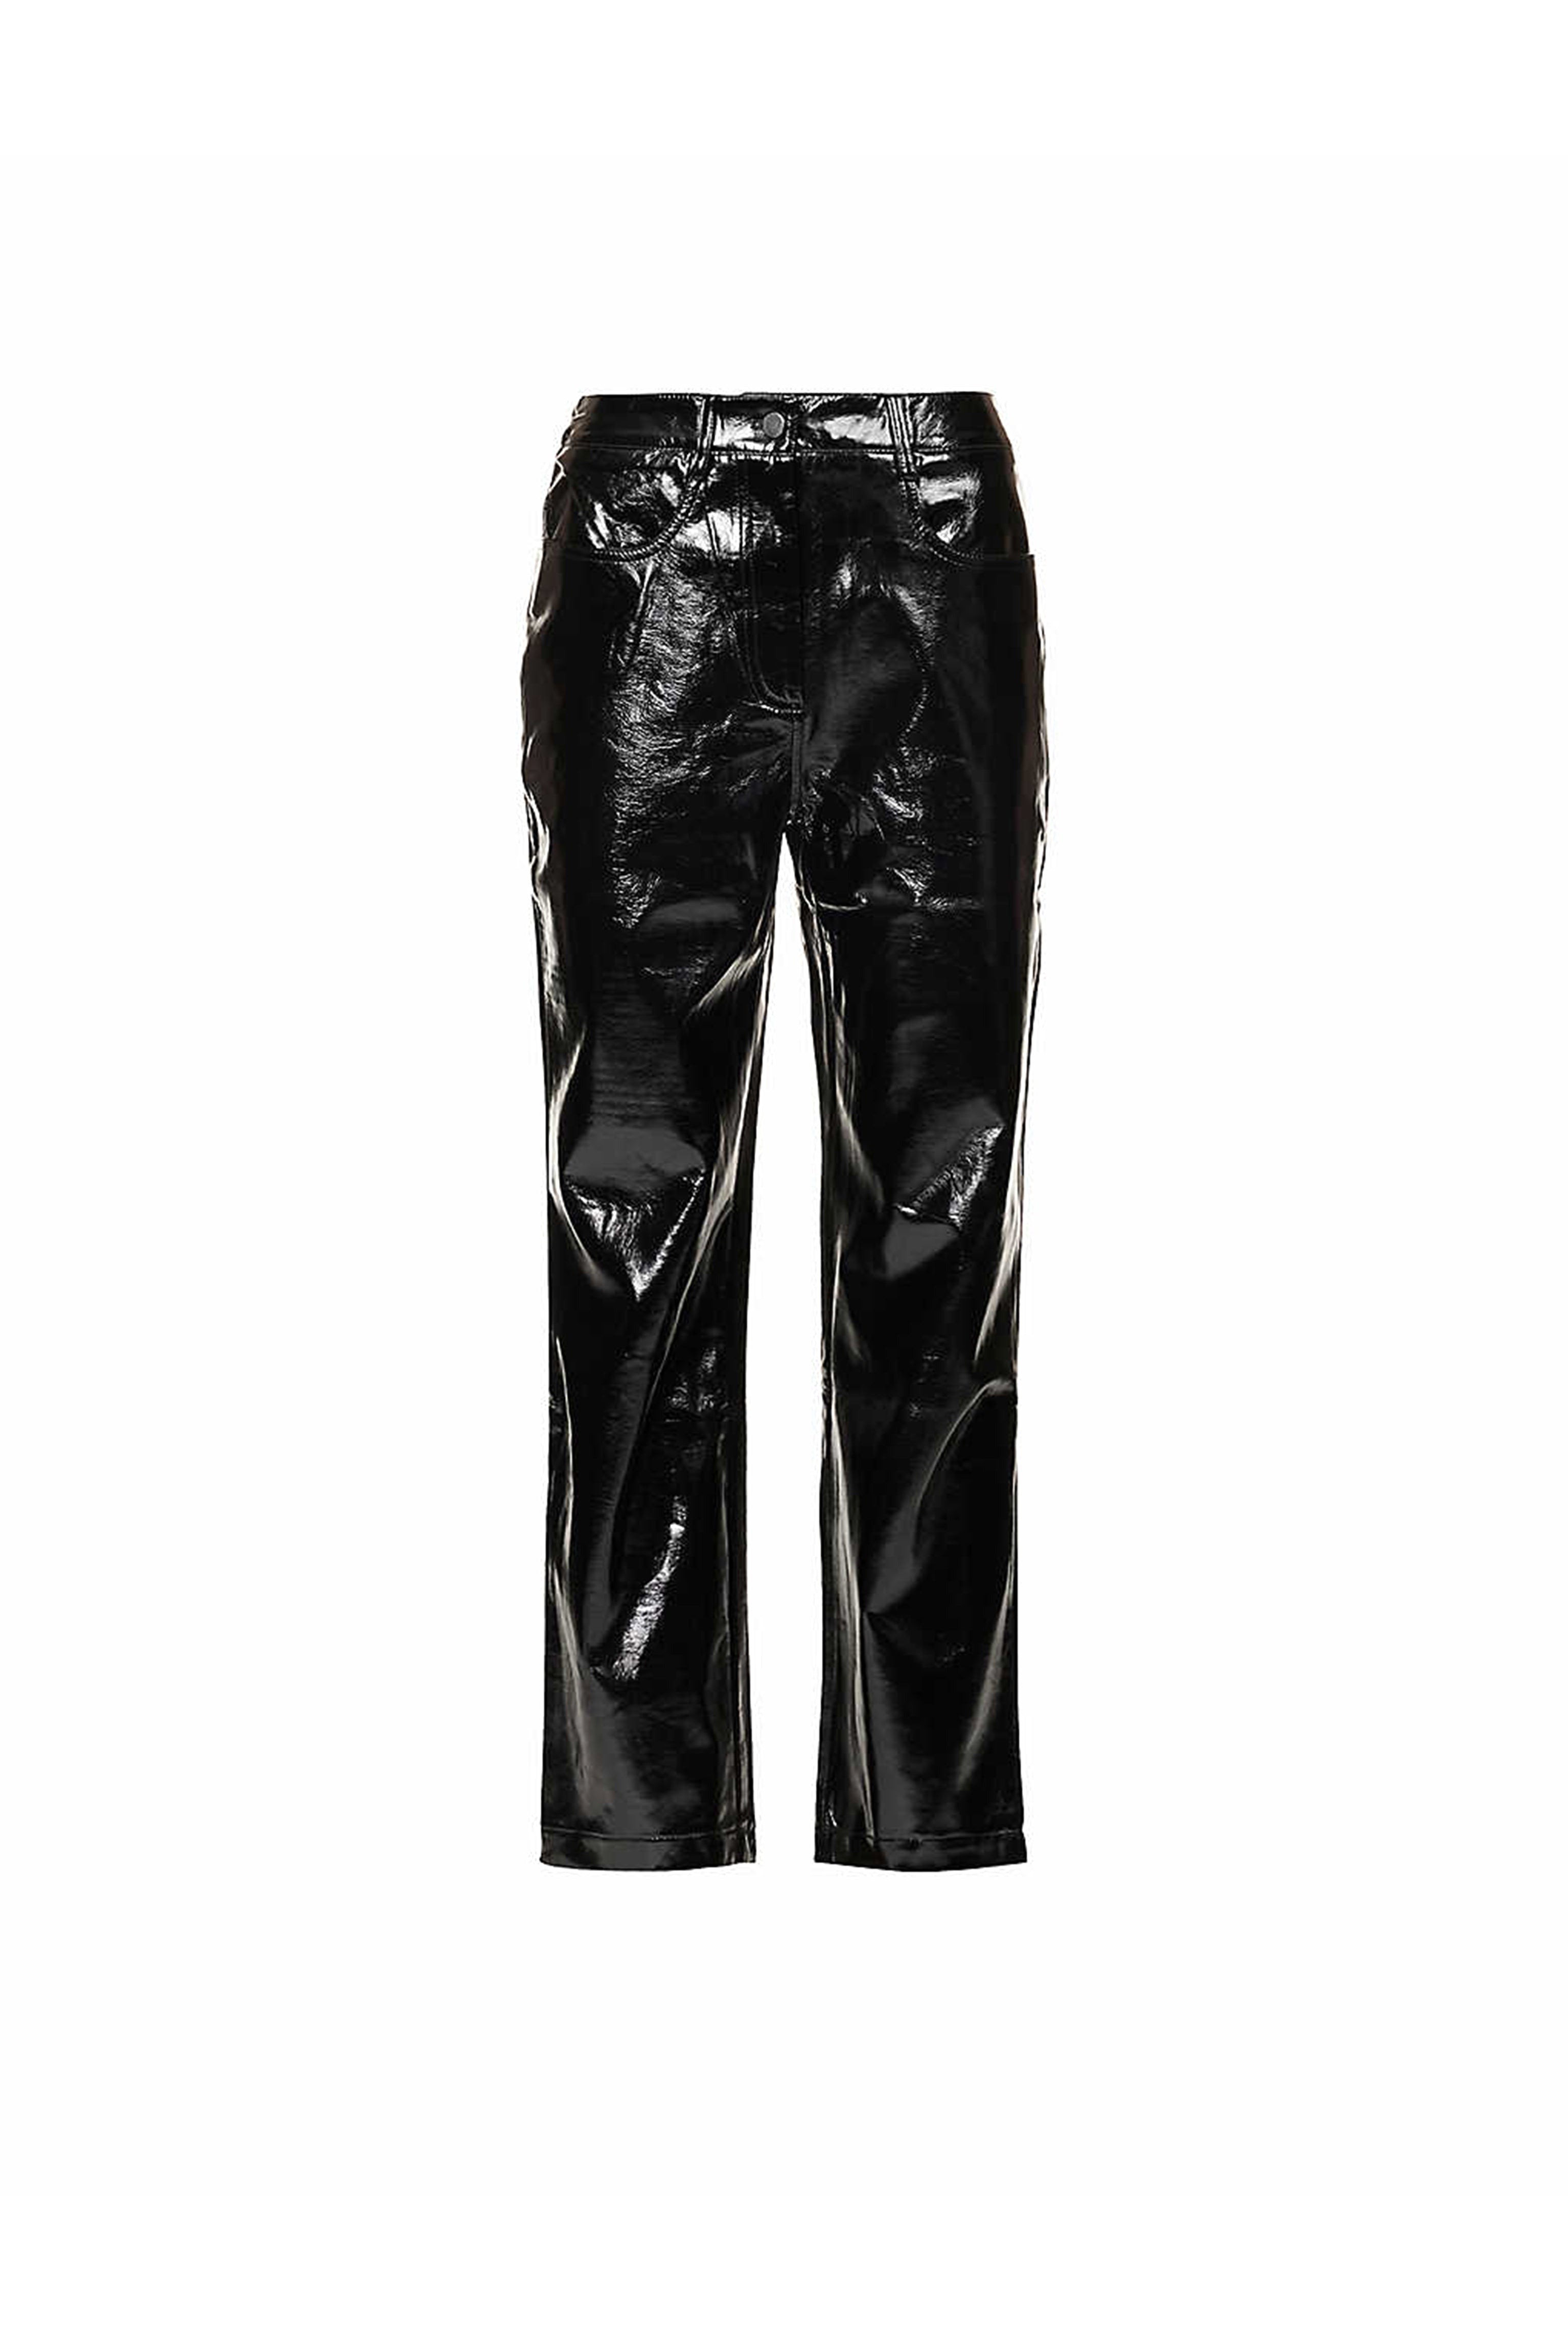 Lupe Black Metallic Straight Leg High Rise Faux Leather Trousers | AmyLynn 